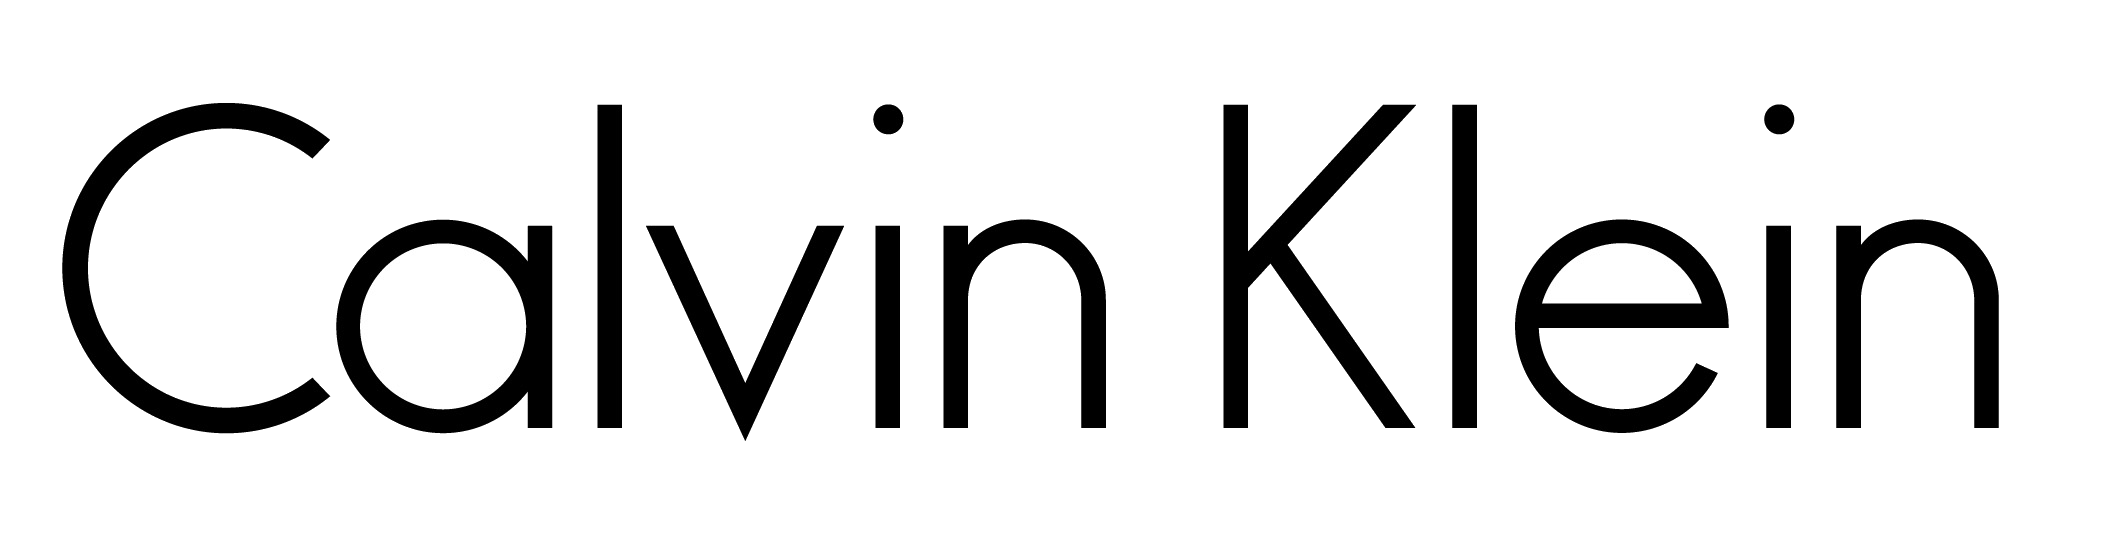 Calvin Klein Logo Background PNG Image